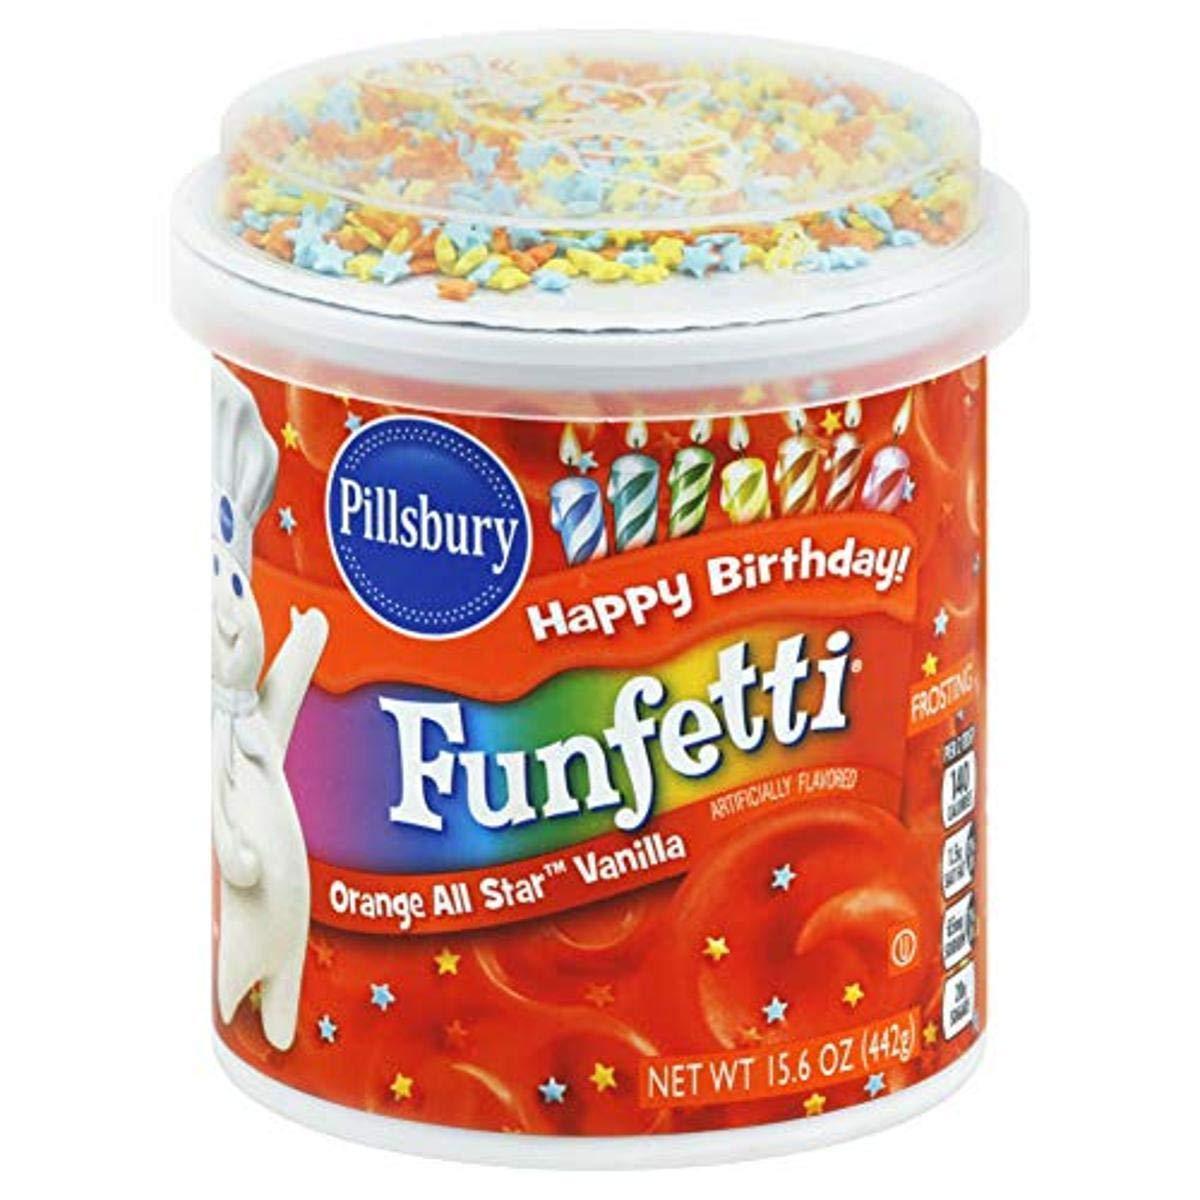 8 Pillsbury Funfetti Orange All Star Vanilla Flavored Frosting for $11.28 Shipped